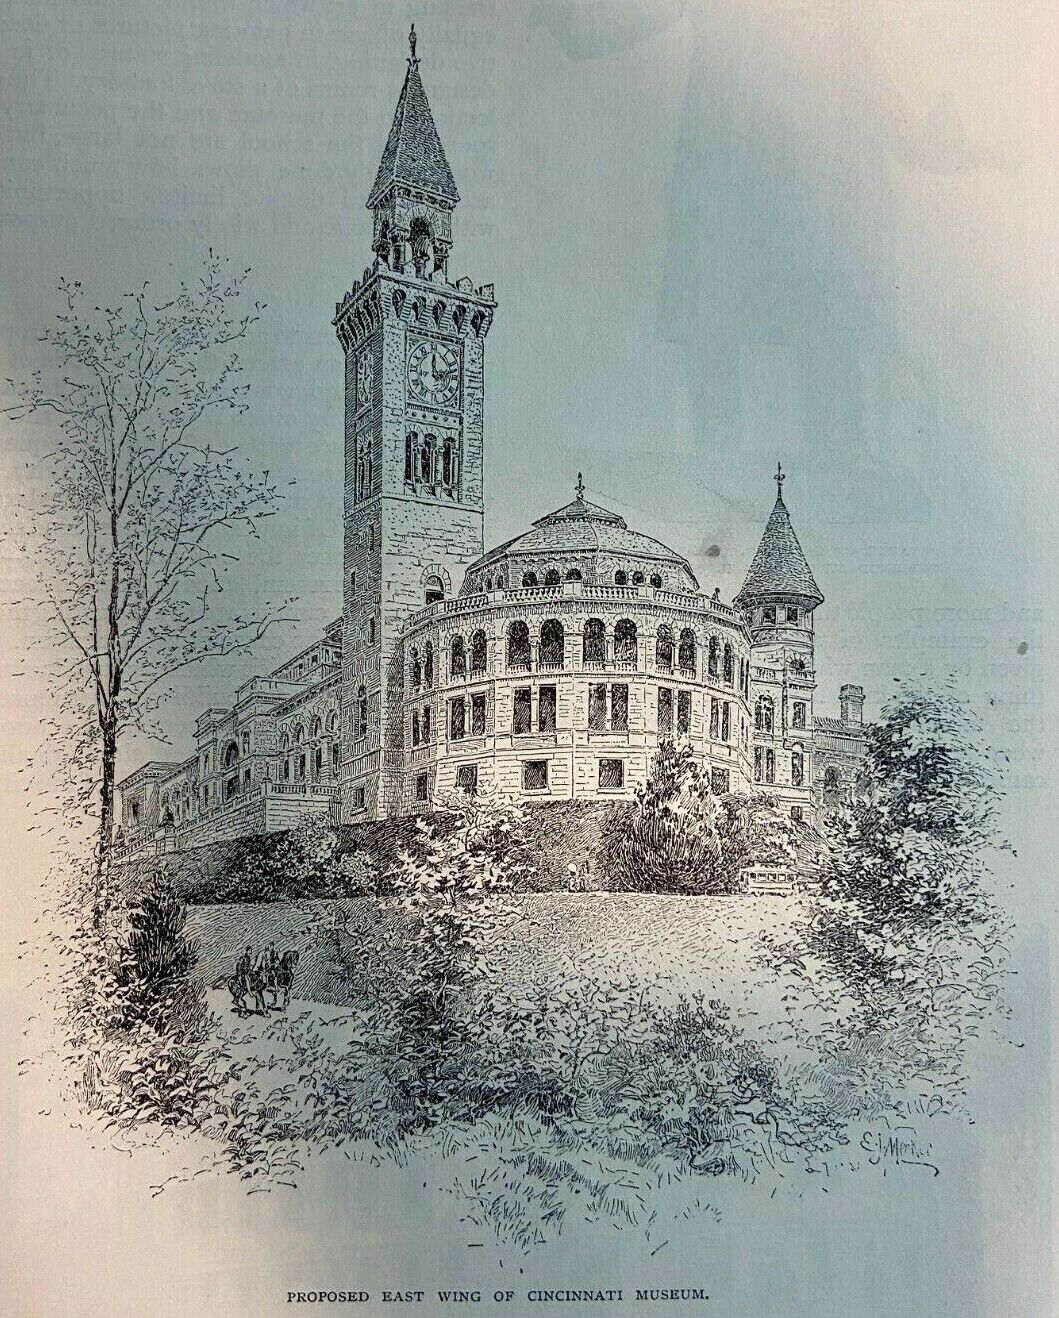 1886 Cincinnati Art School and Museum St. Louis Museum of Art Layton Art Gallery